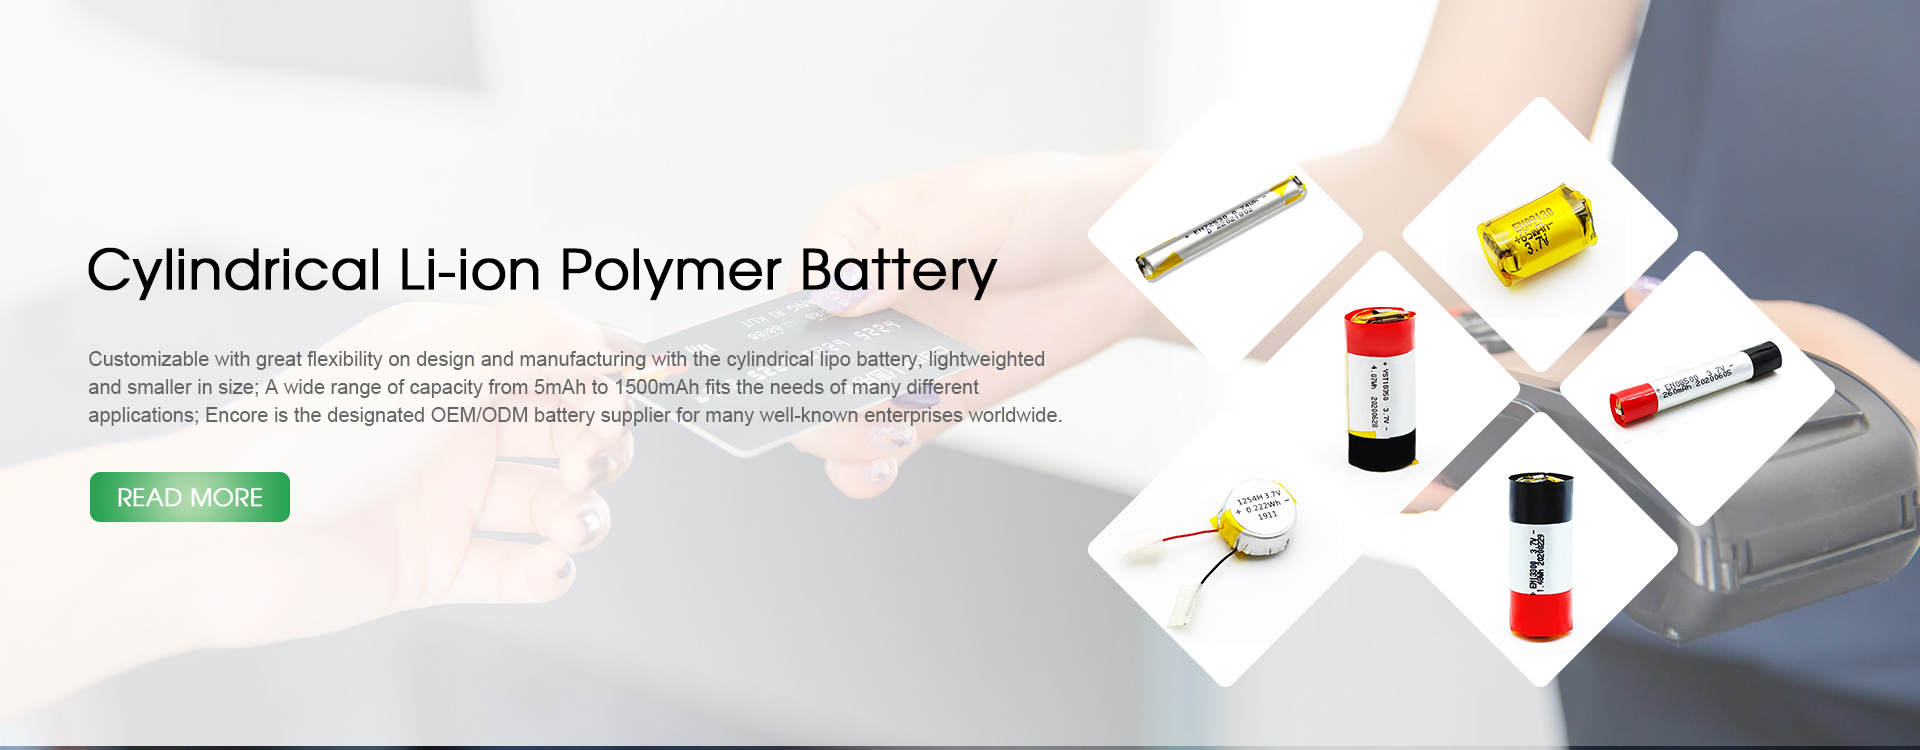 Li Polymerus Pugna Cylindrica Manufacturers